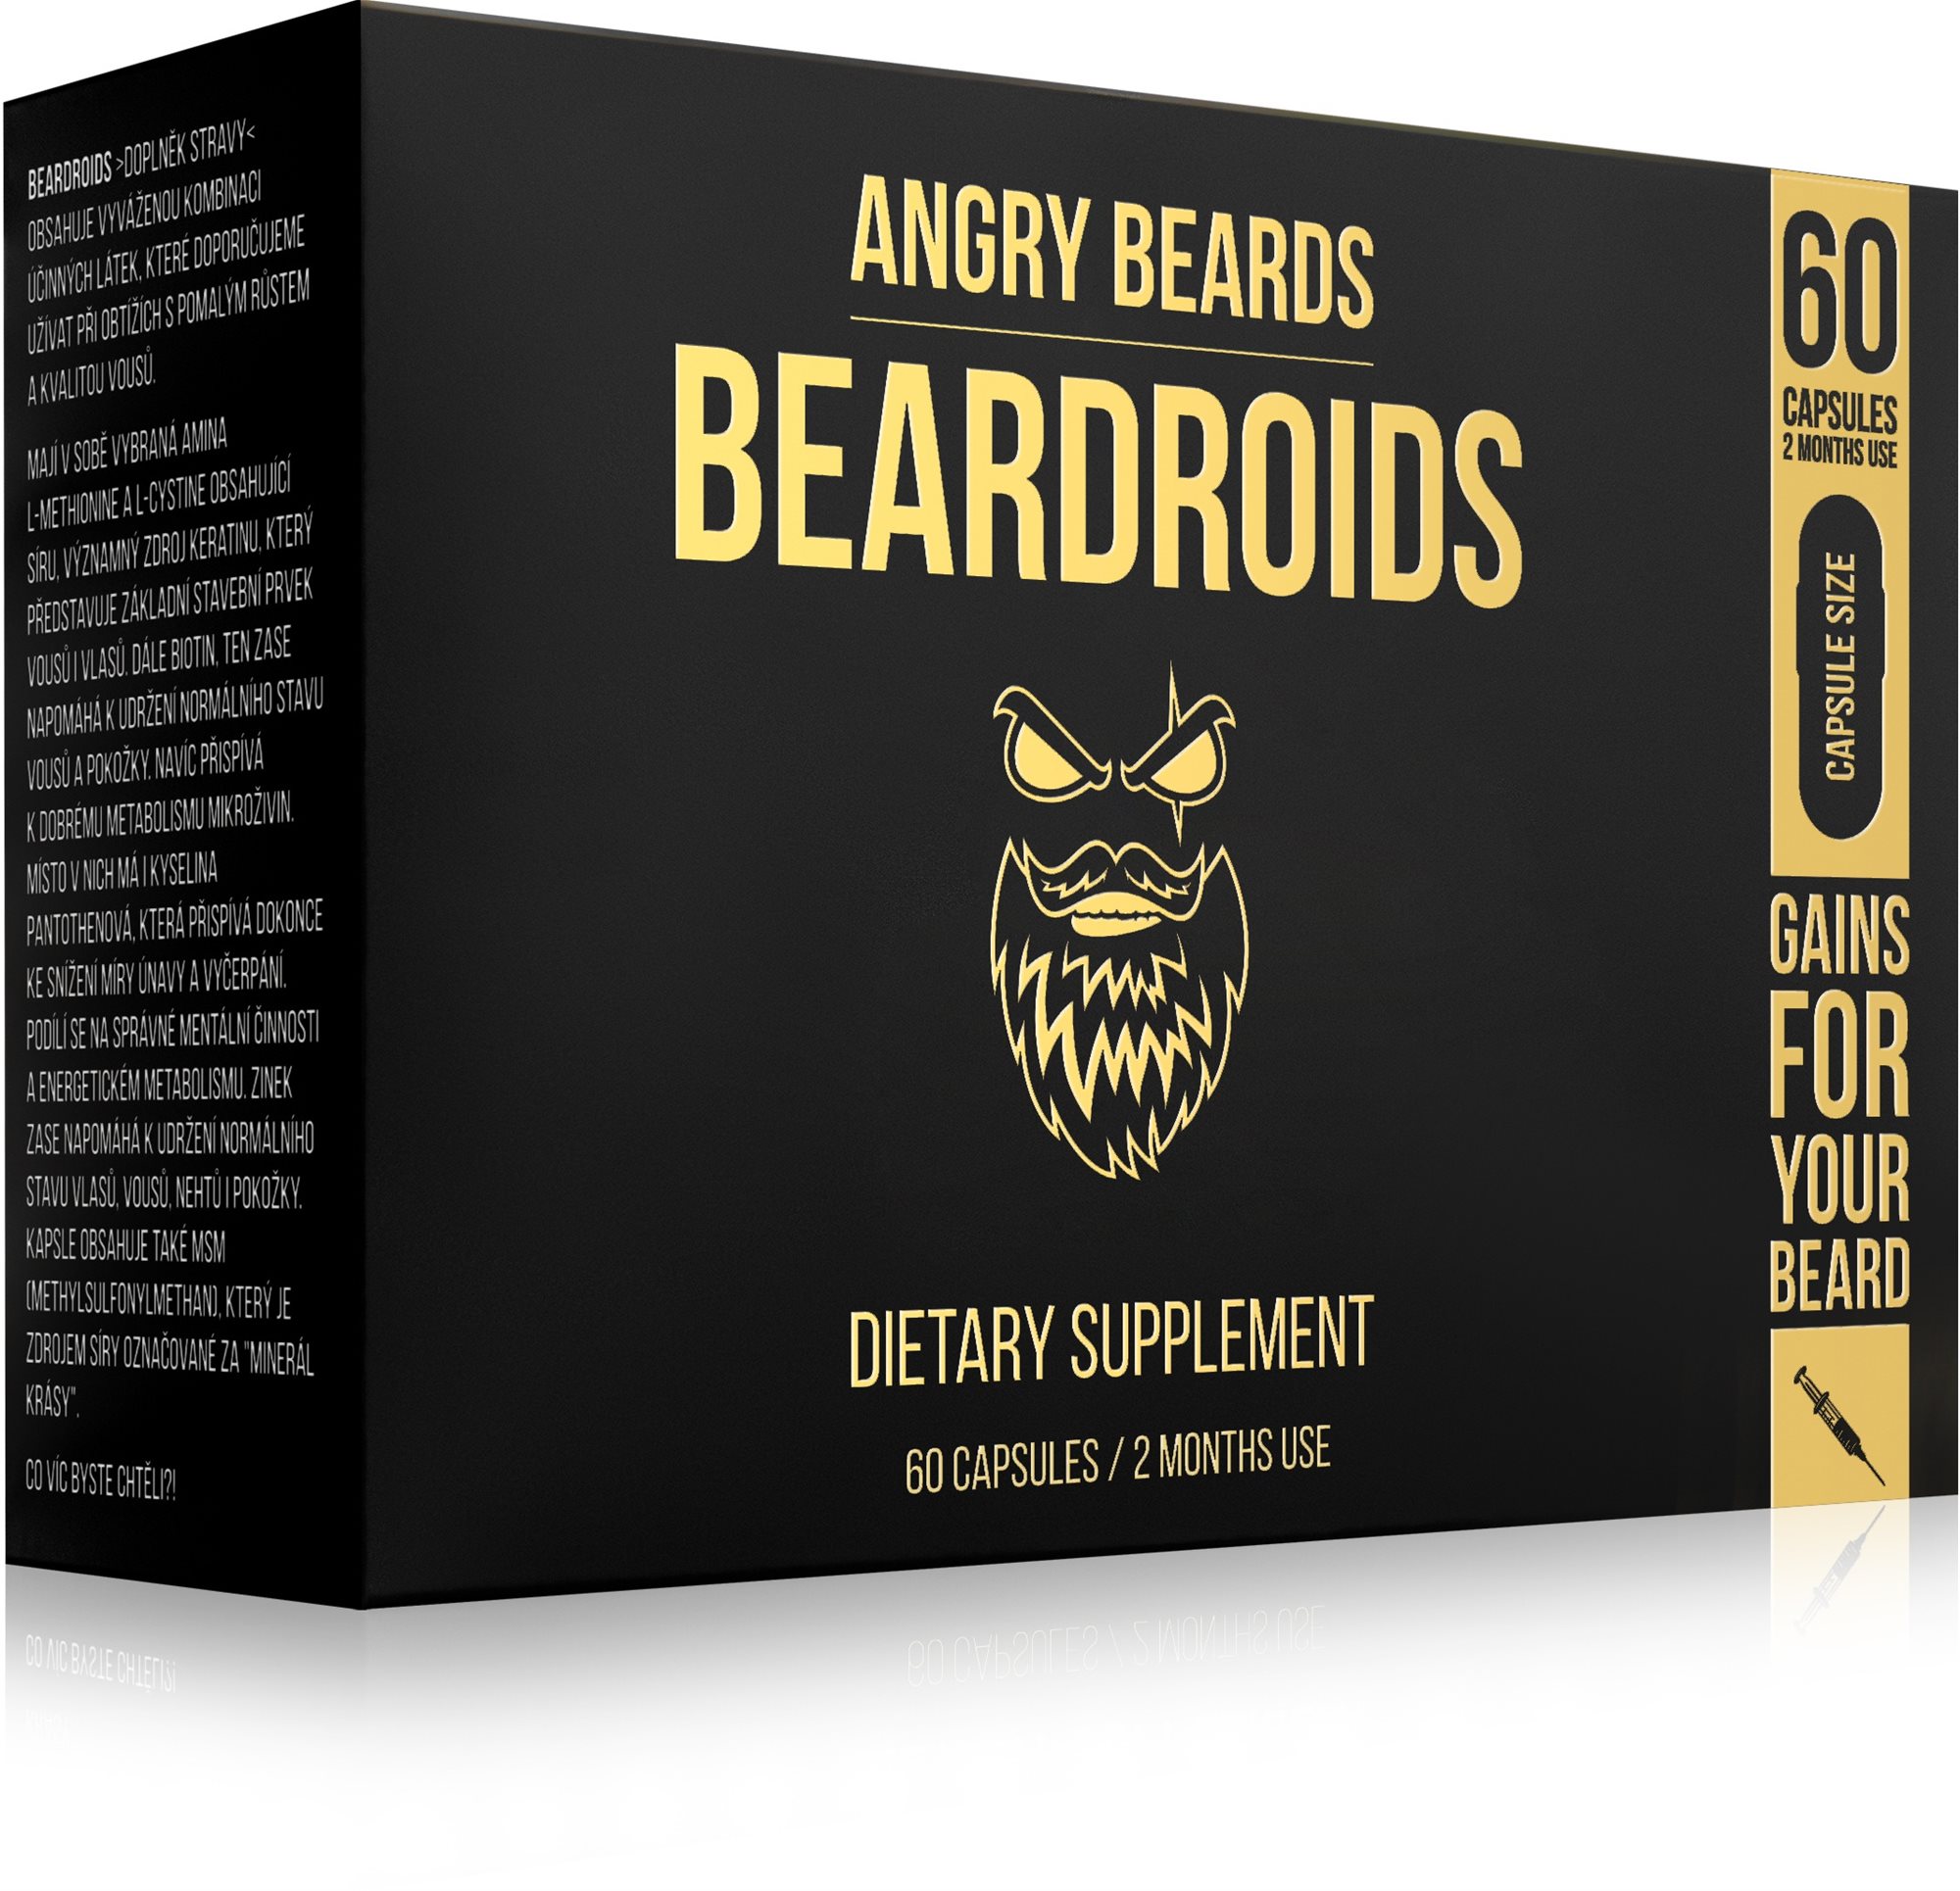 ANGRY BEARDS Beardroids